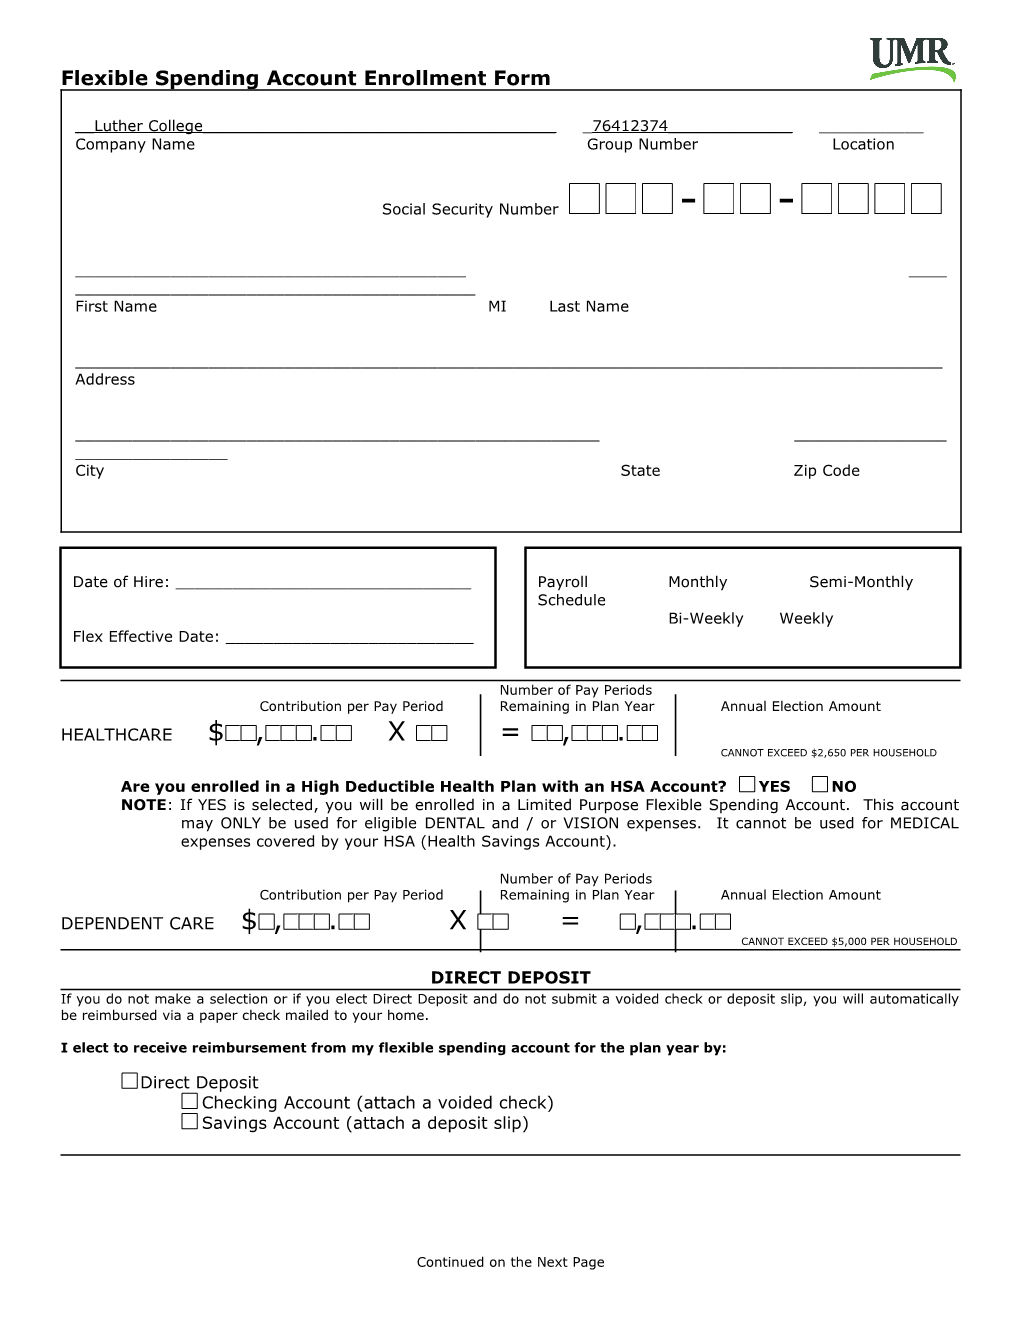 Flexible Spending Account Enrollment Form s1